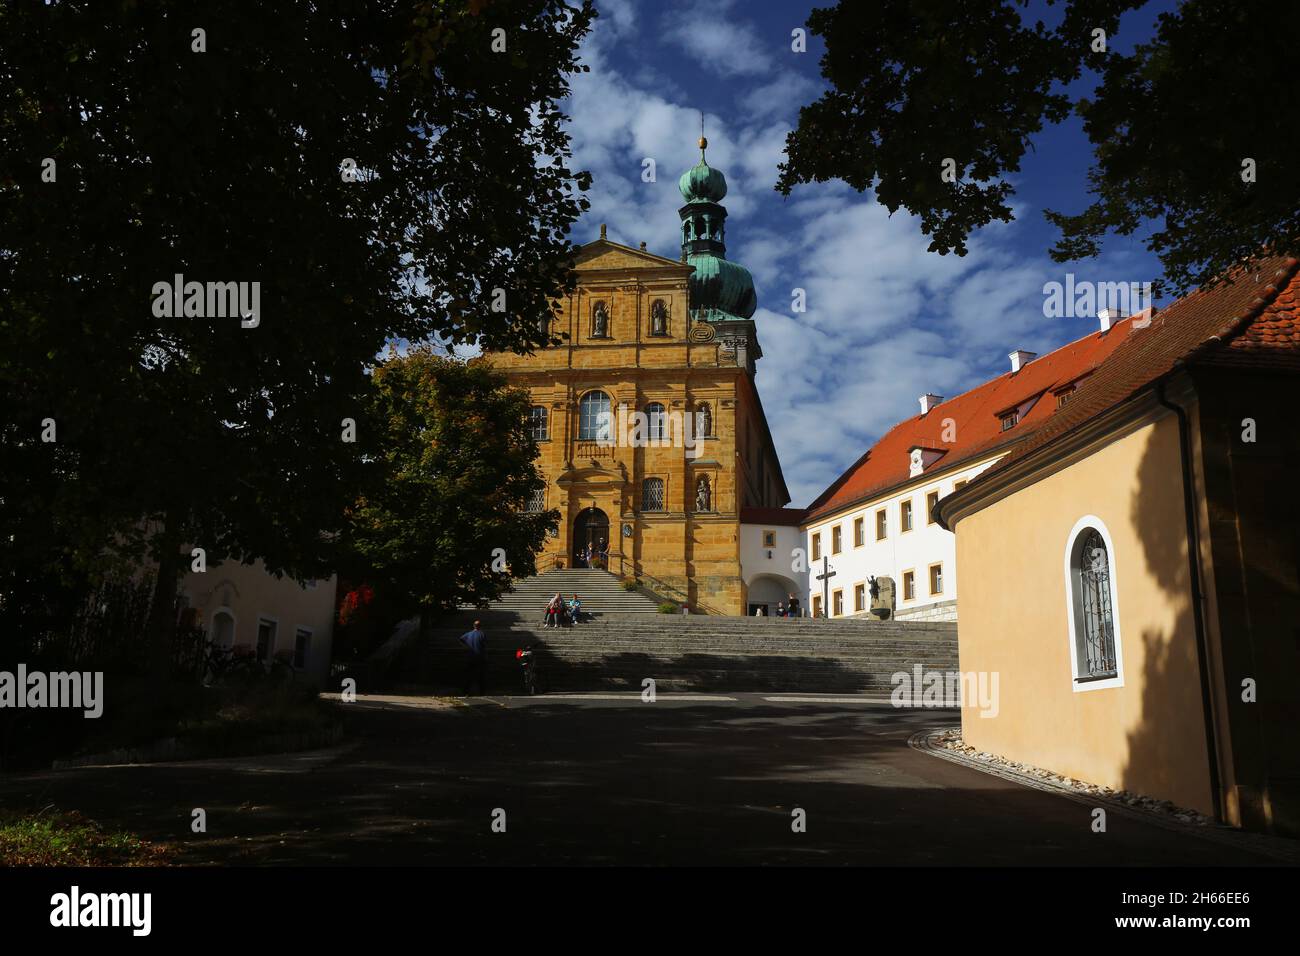 Wallfahrtskirche, Barockkirche, Amberg, ;Maria Hilf, Kirche, Bergkirche, Kirchturm in der Oberpfalz, Bayern! Foto de stock